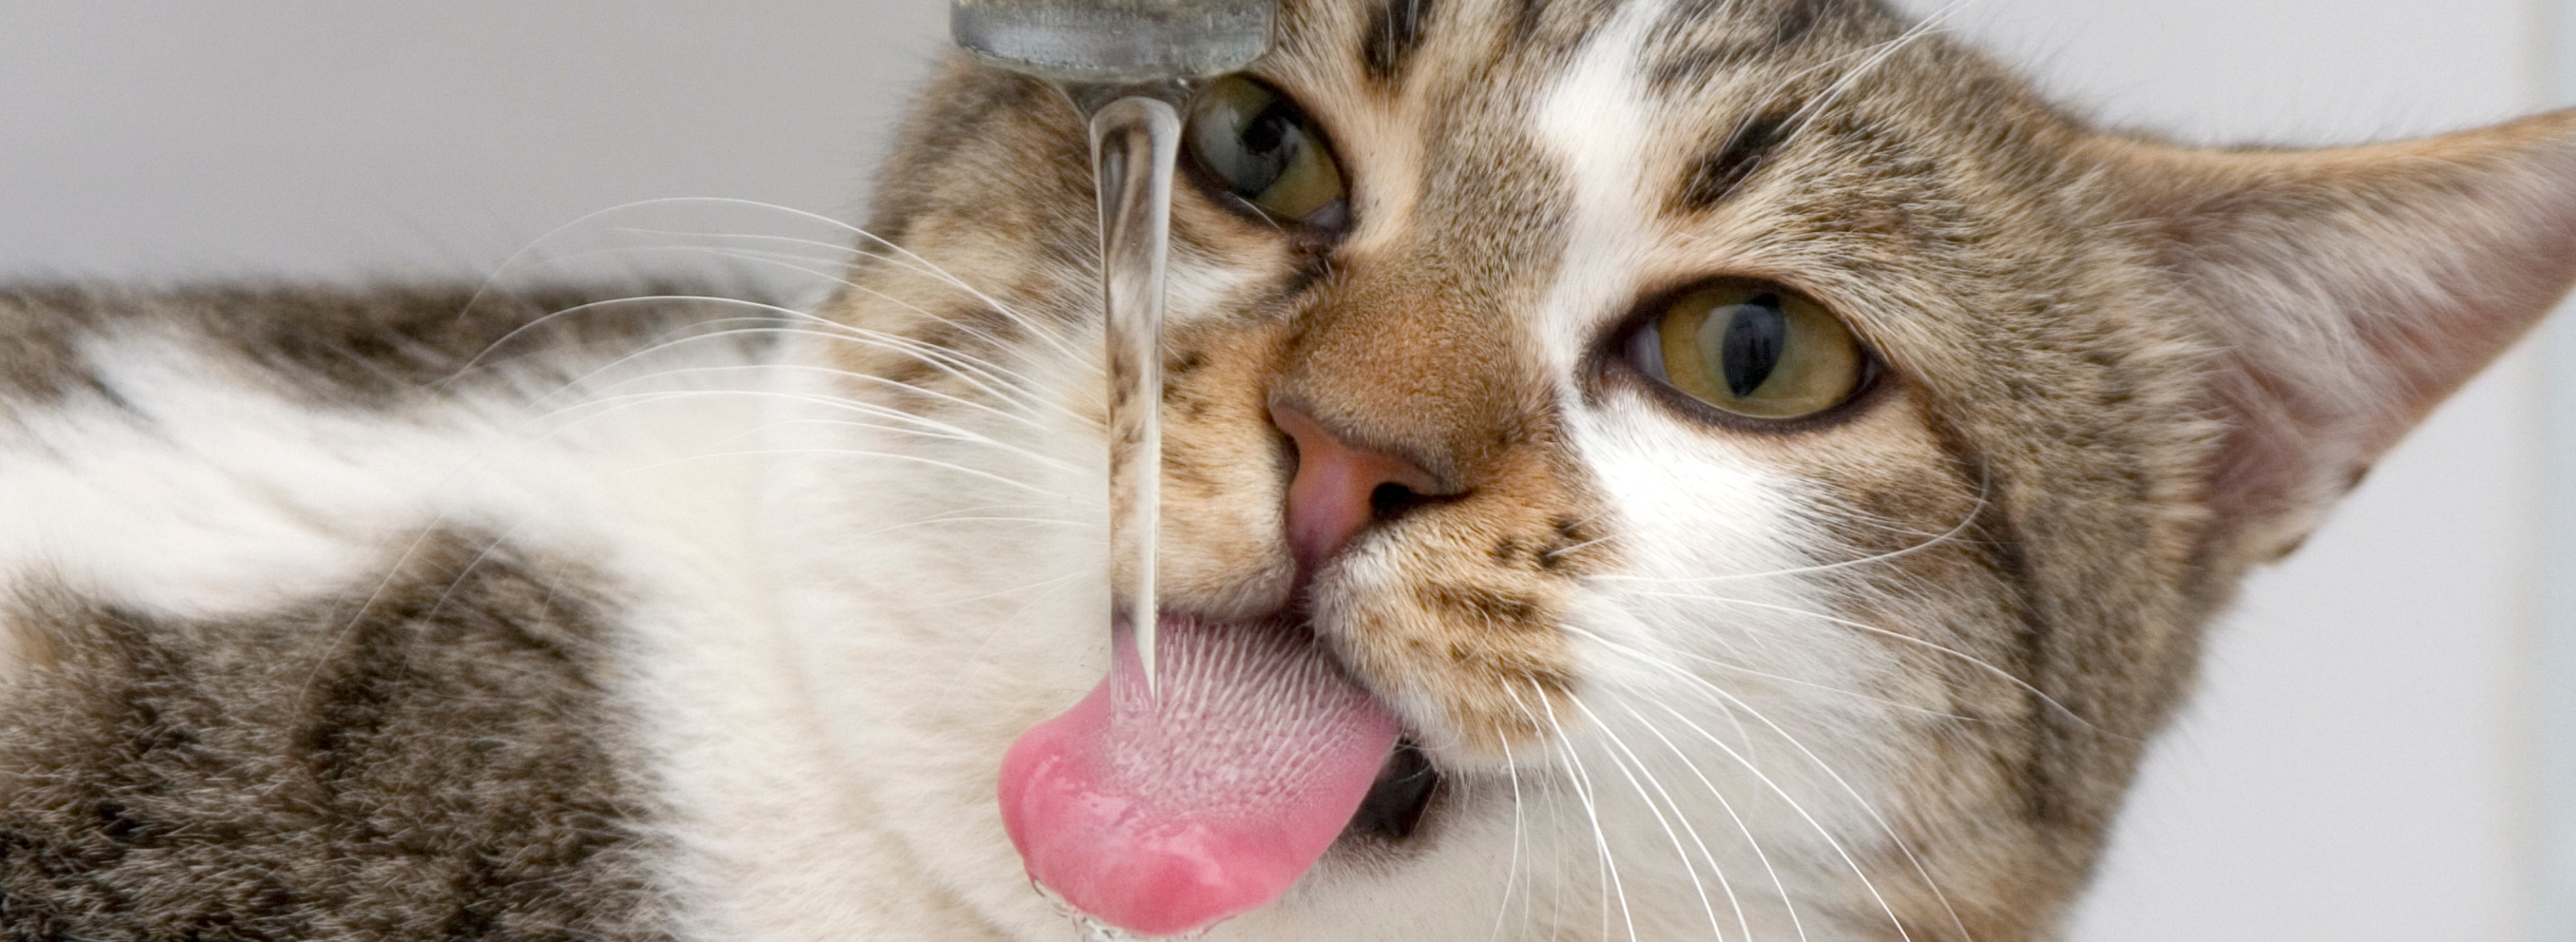 emergency drinking water, cat drinking water